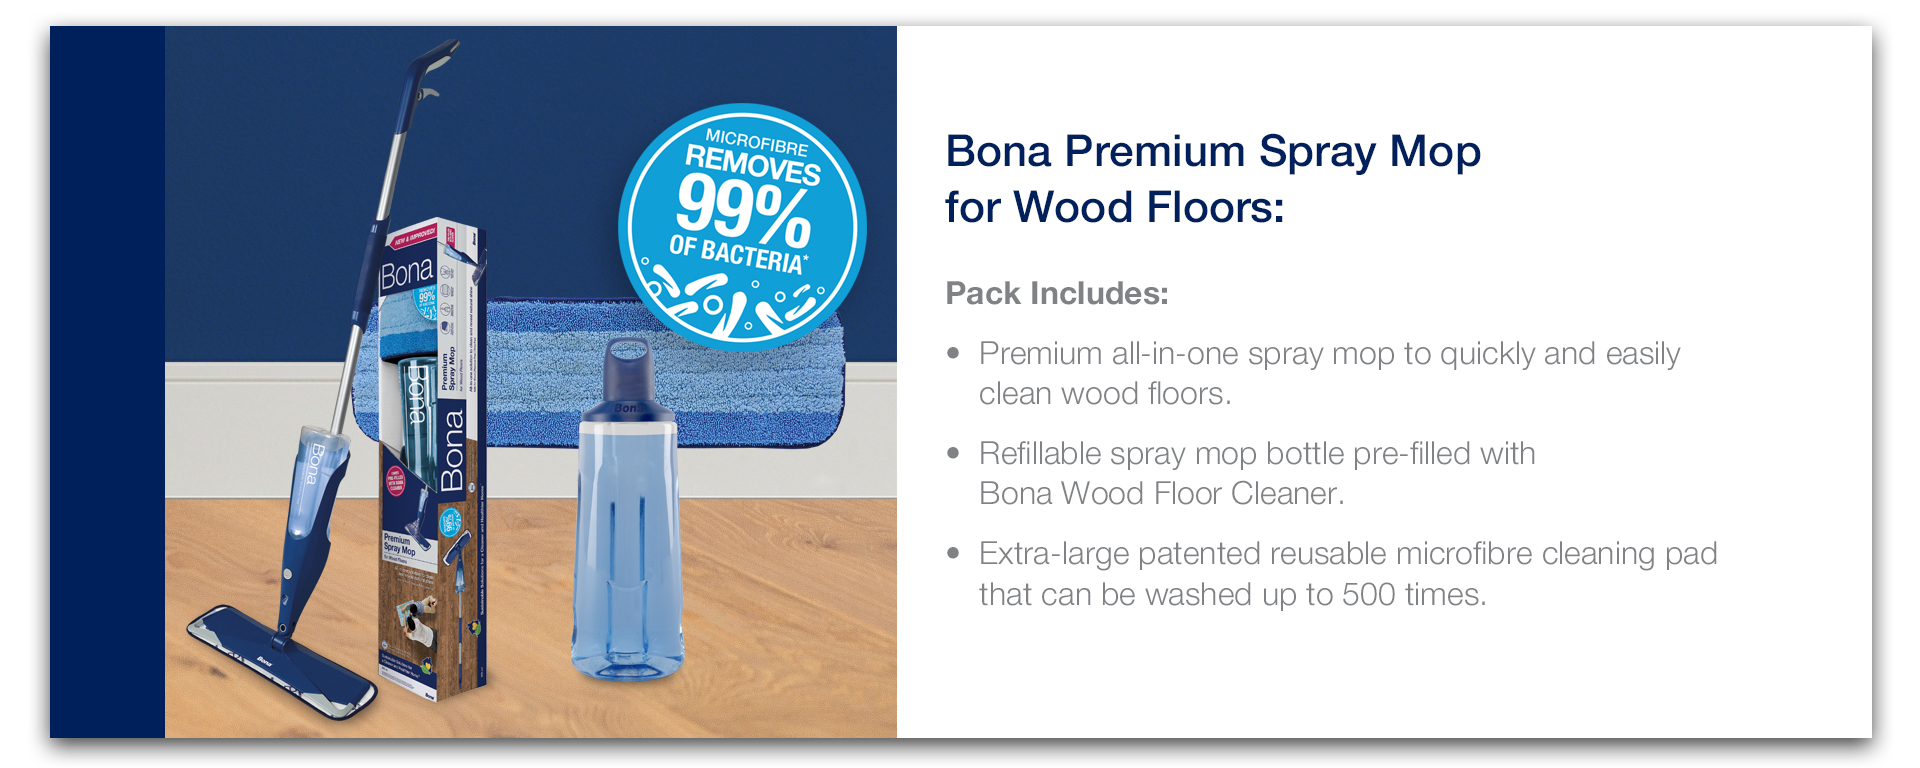 Oiled Wood Floors, Bona Premium Spray Mop For Hardwood Floors